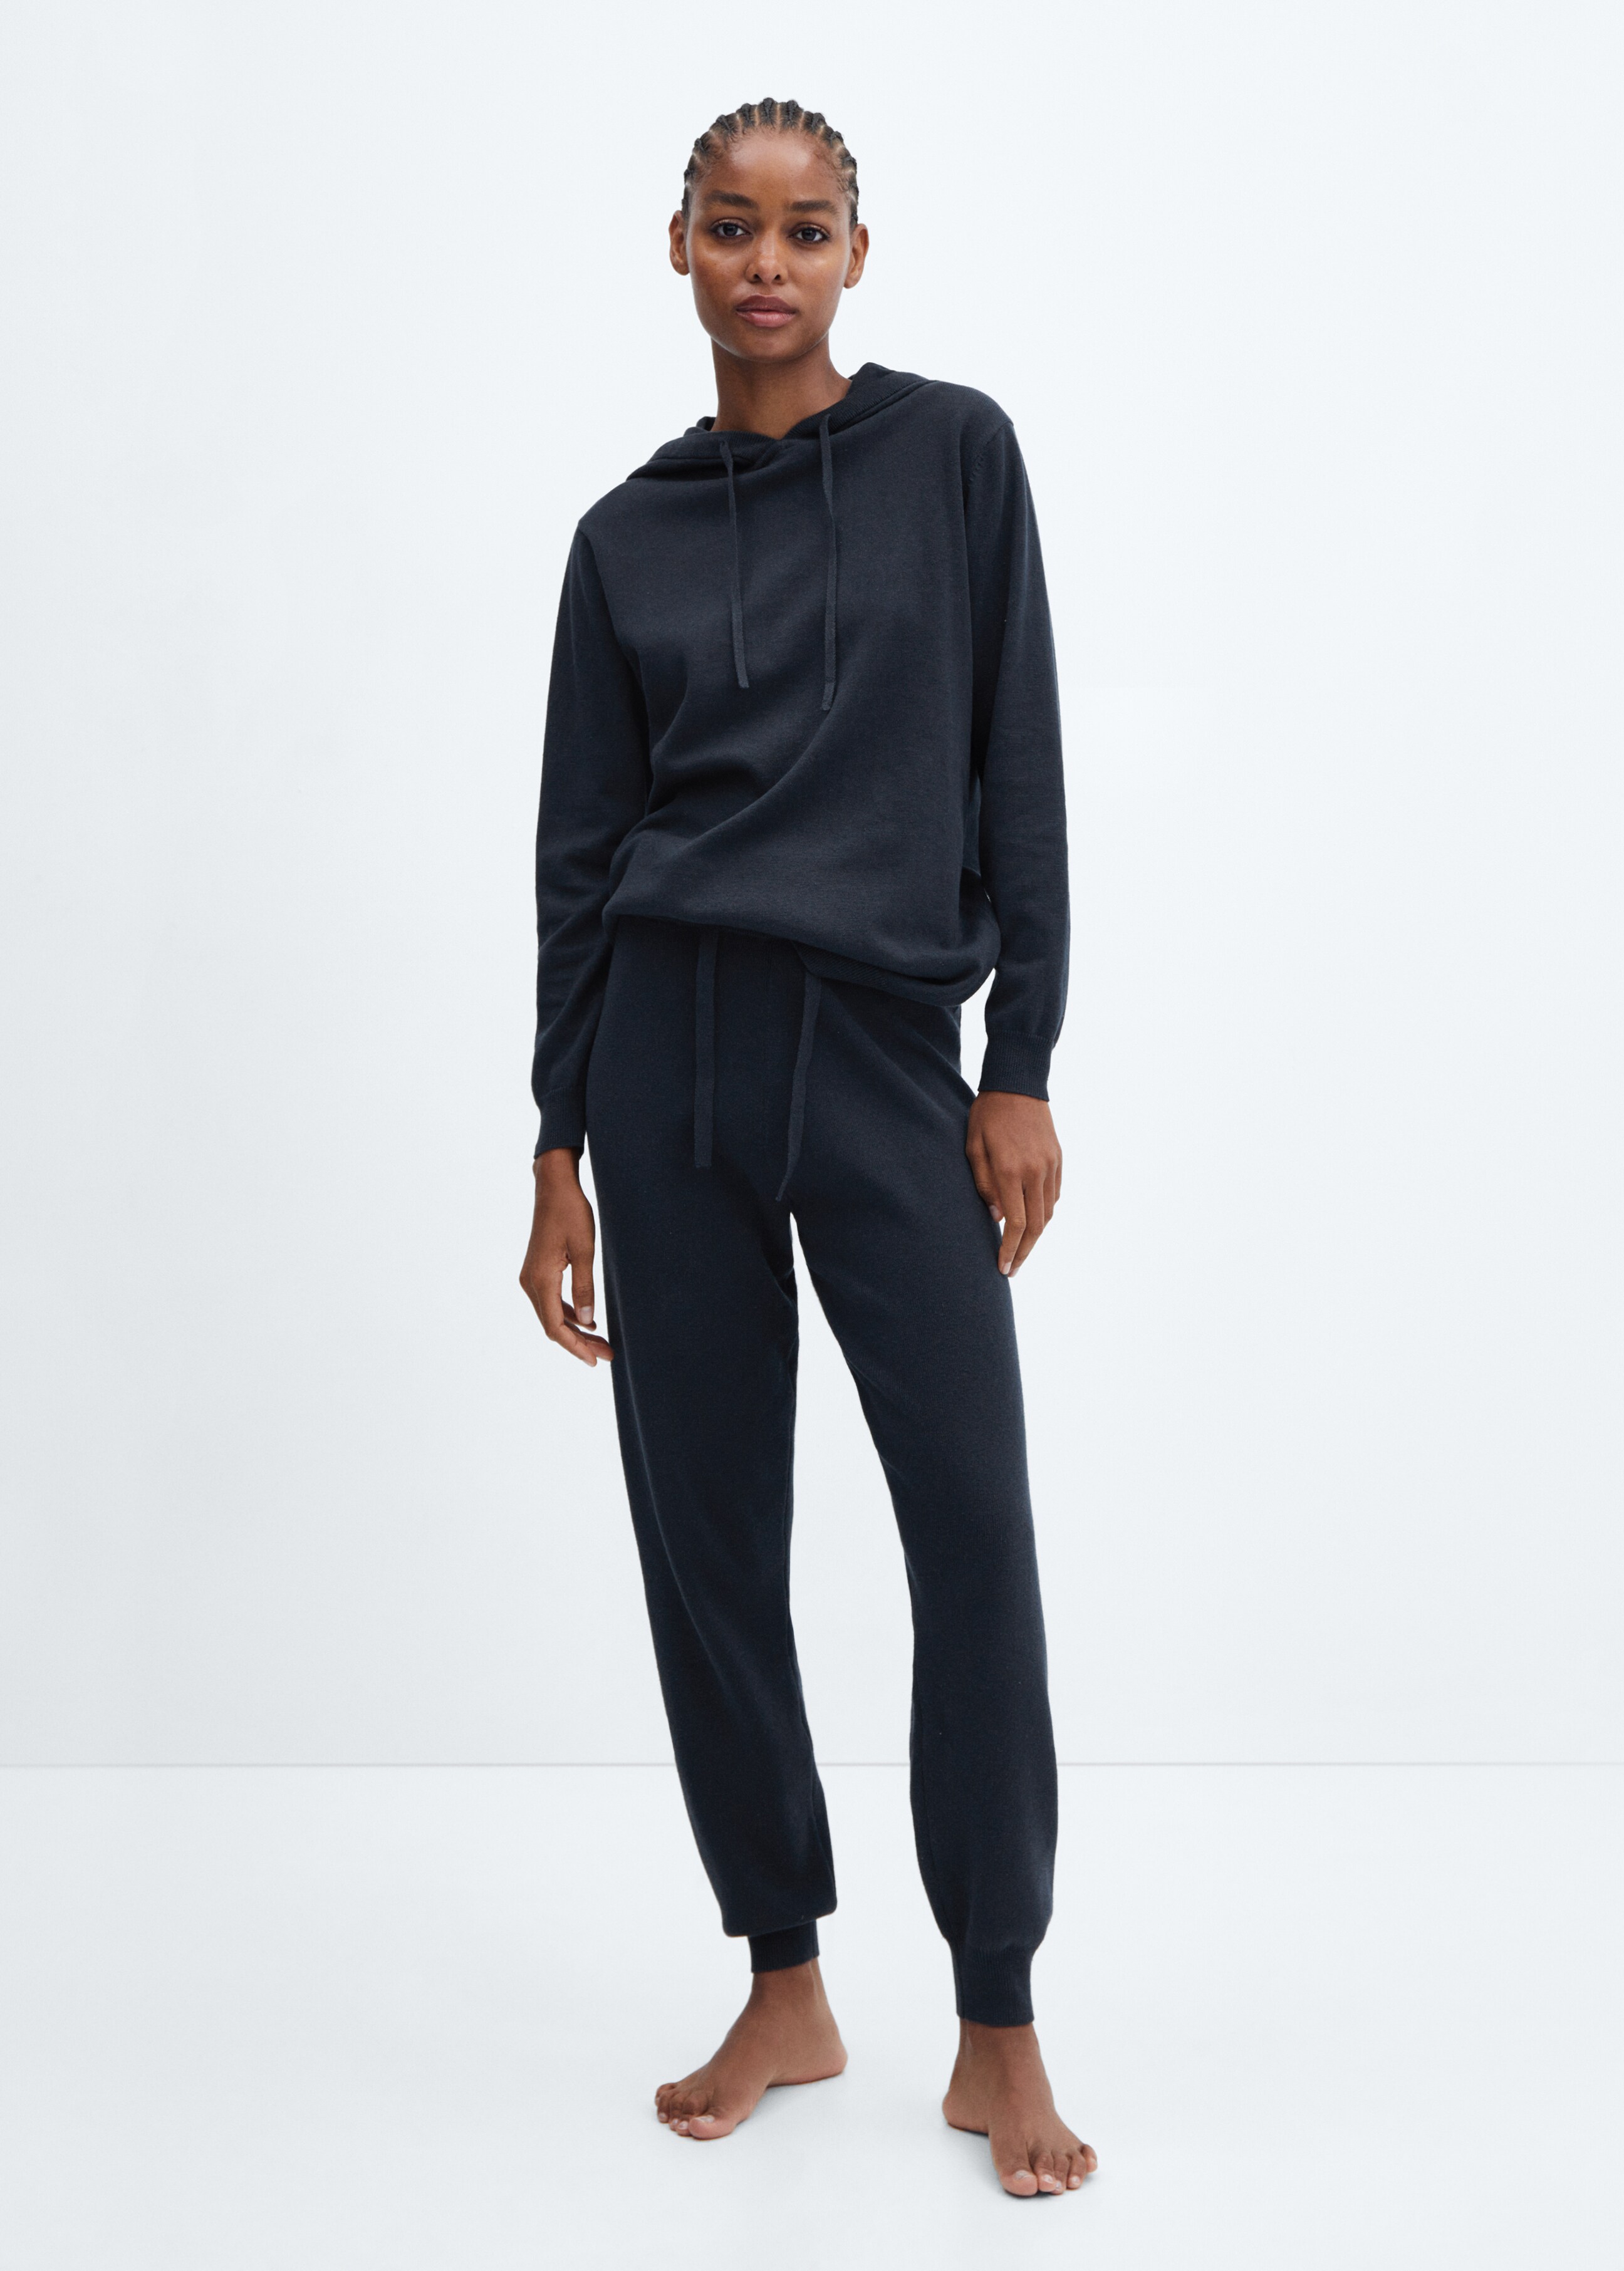 Pantalon pyjama jogging coton et lin - Plan général